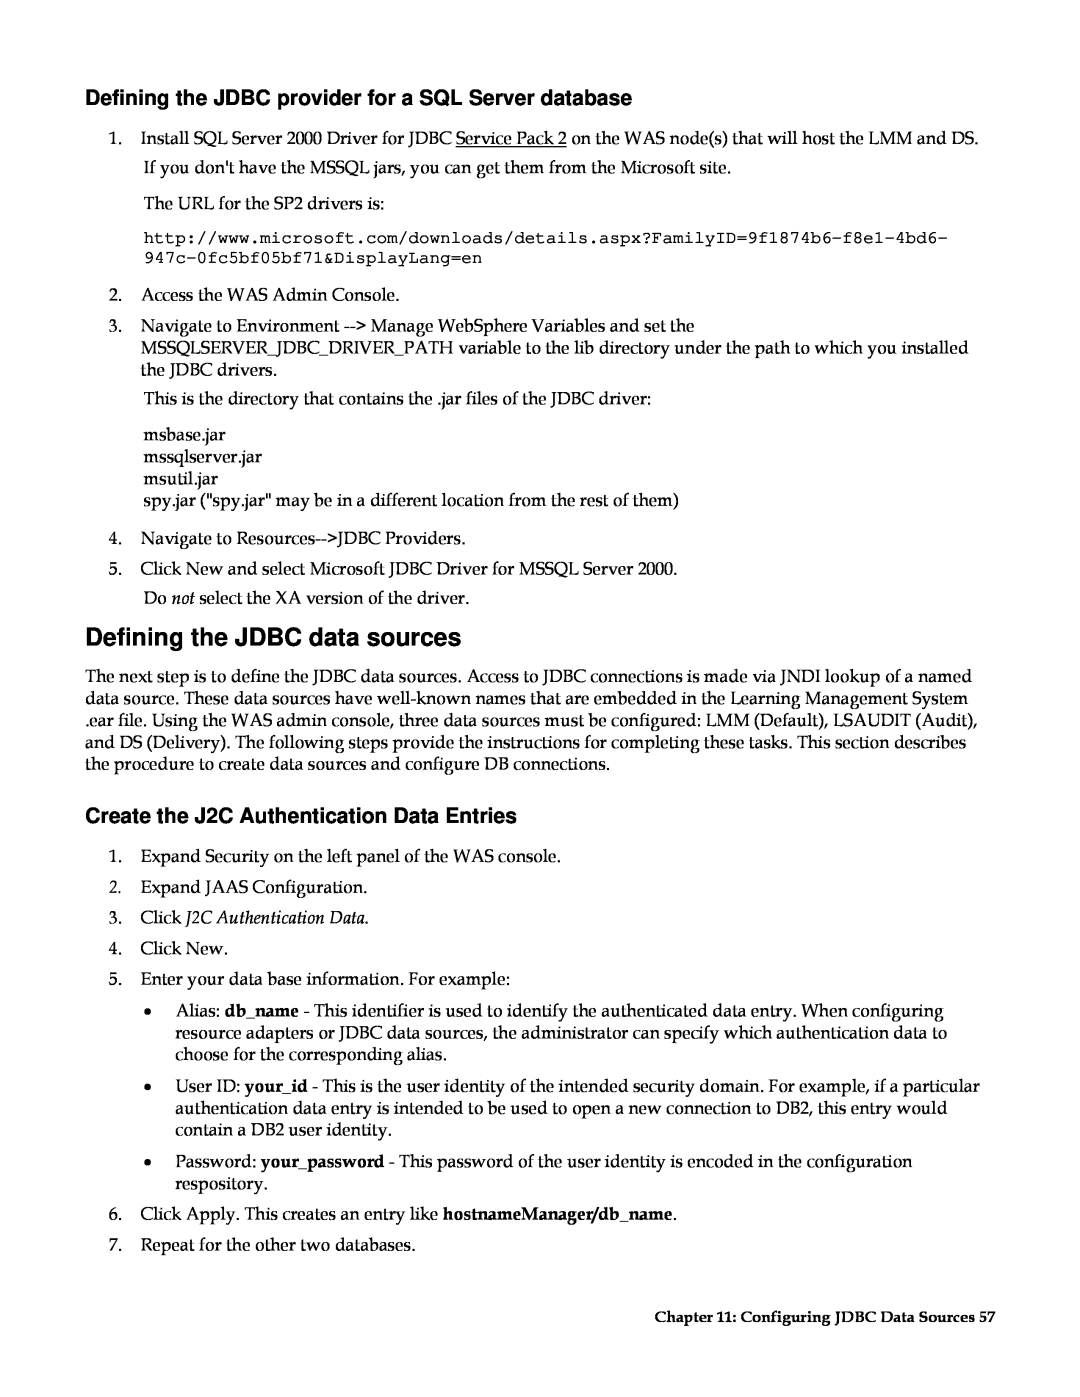 IBM G210-1784-00 manual Defining the JDBC data sources, Defining the JDBC provider for a SQL Server database 